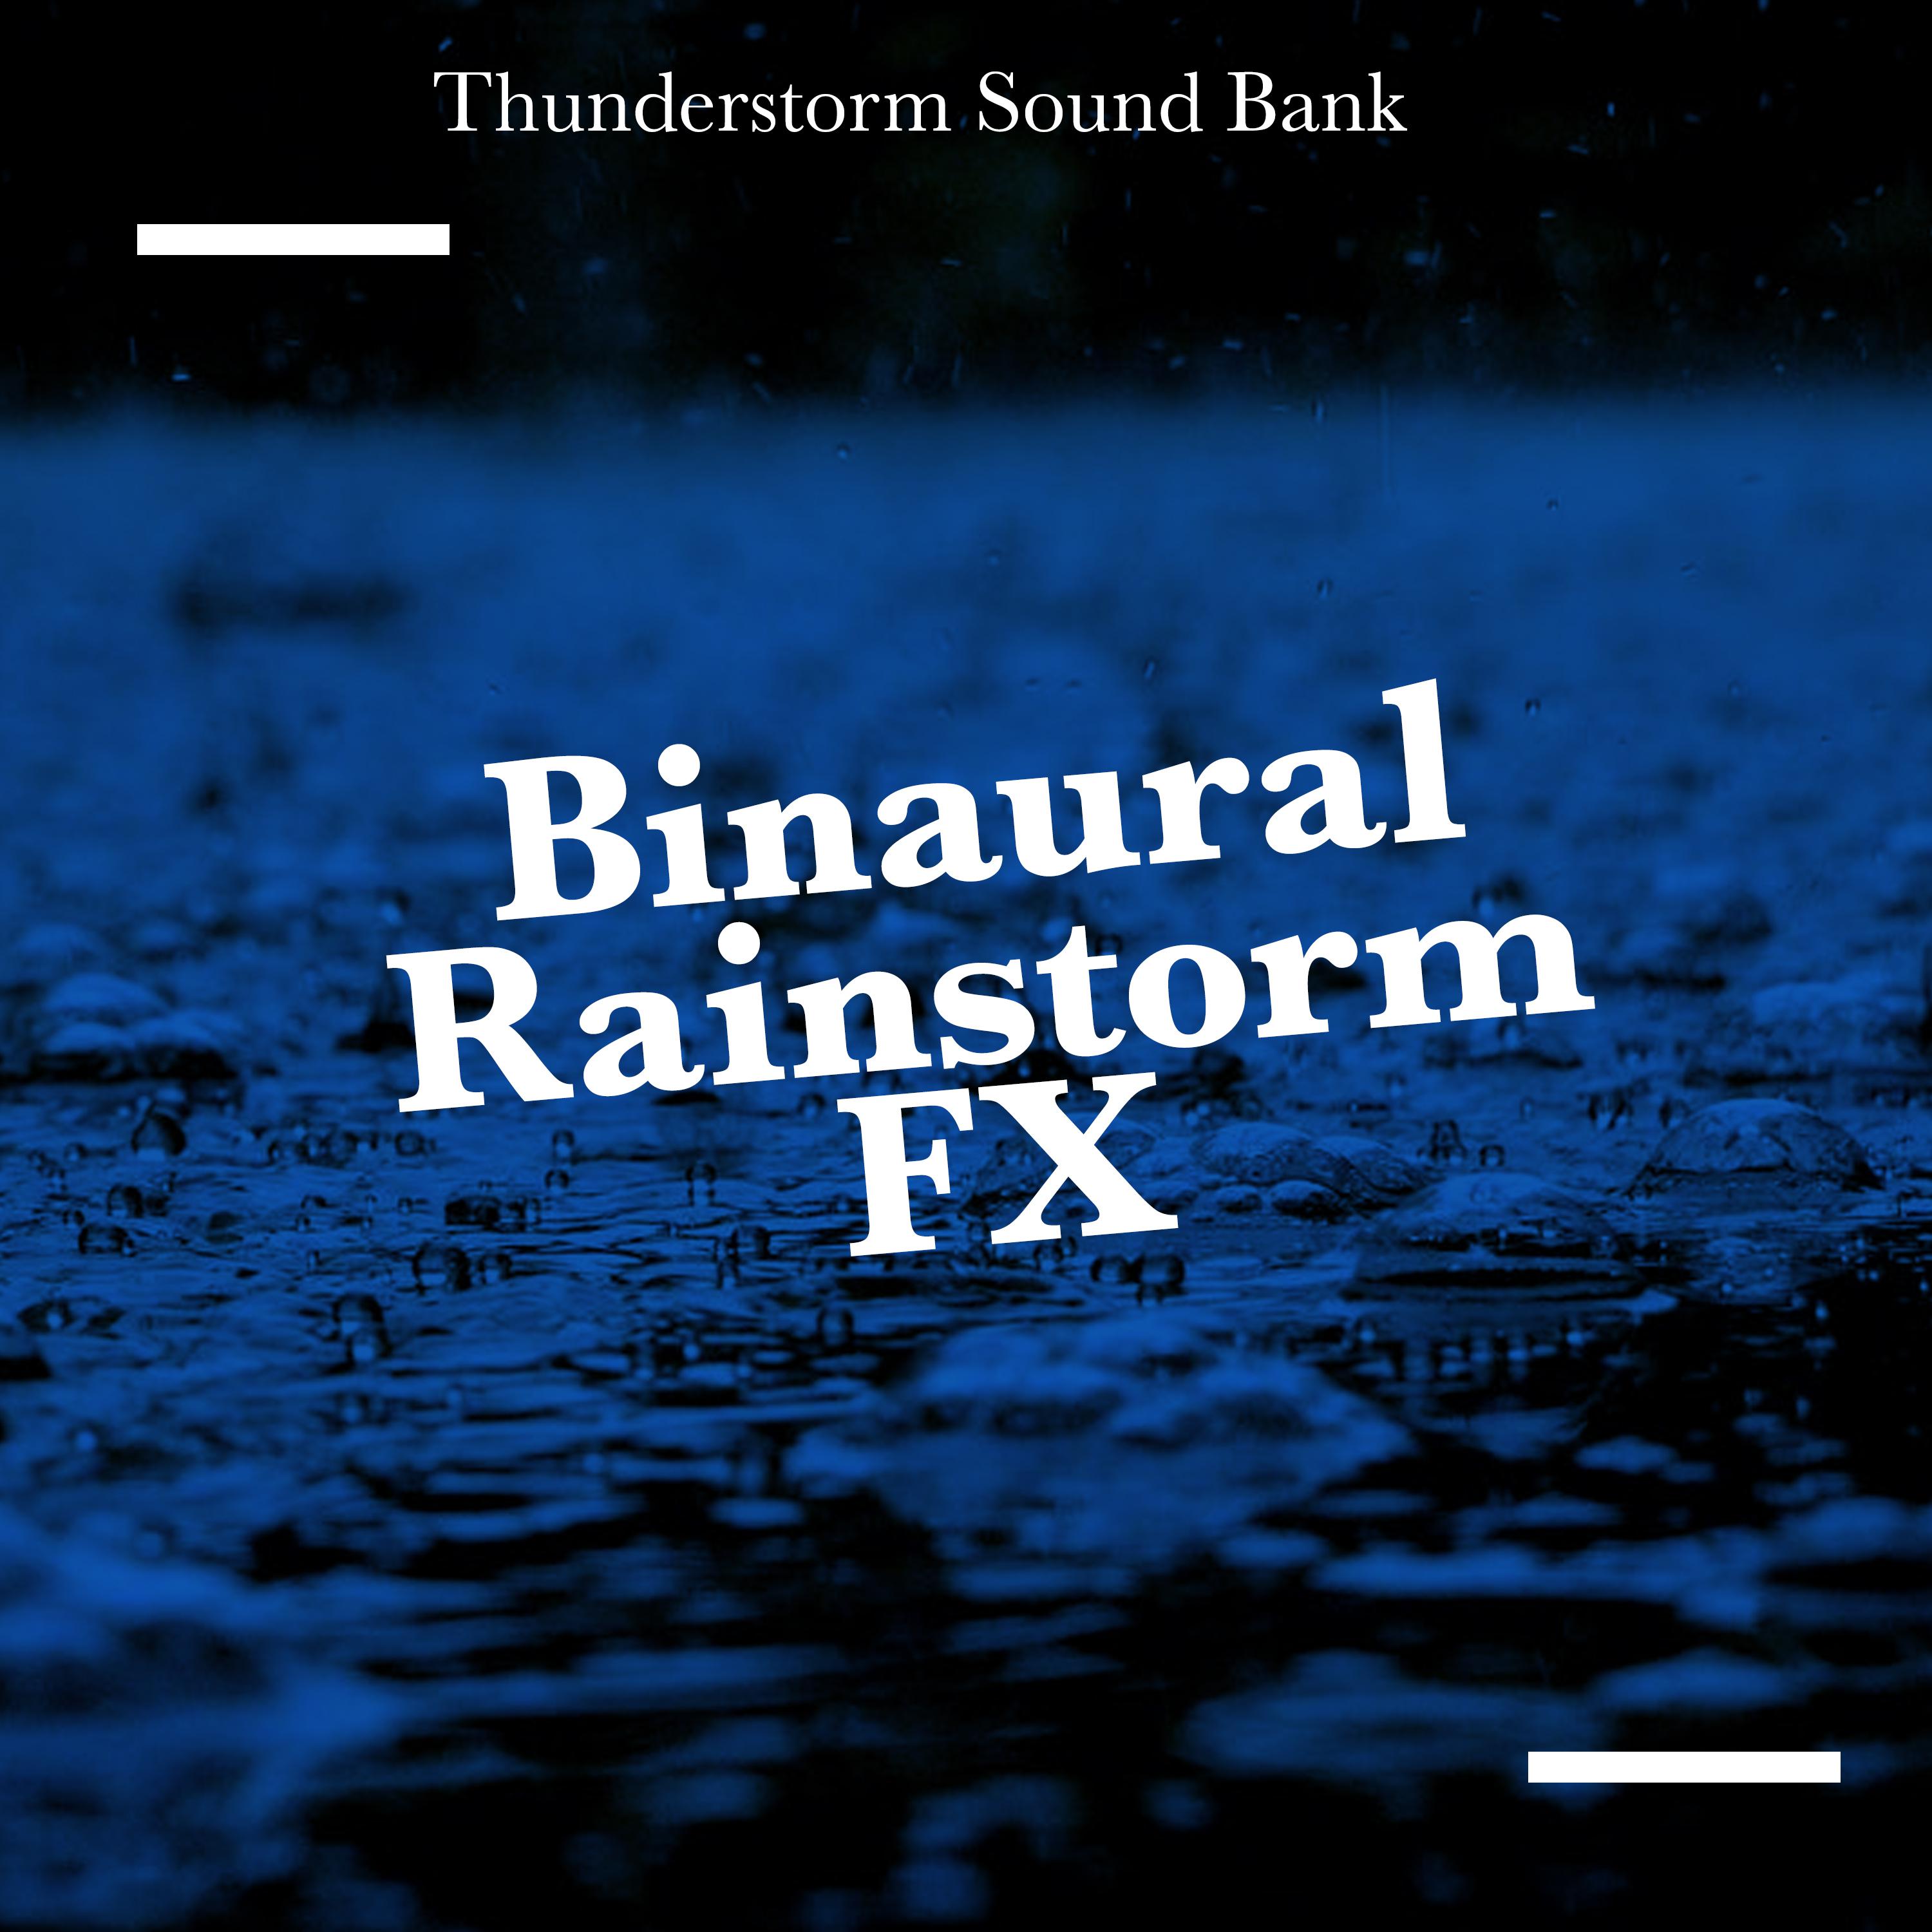 Binaural Rainstorm FX